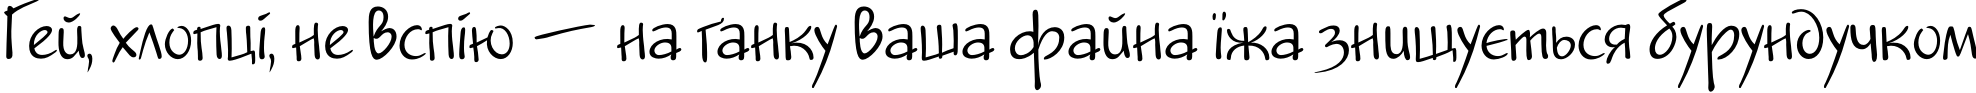 Пример написания шрифтом JakobC текста на украинском